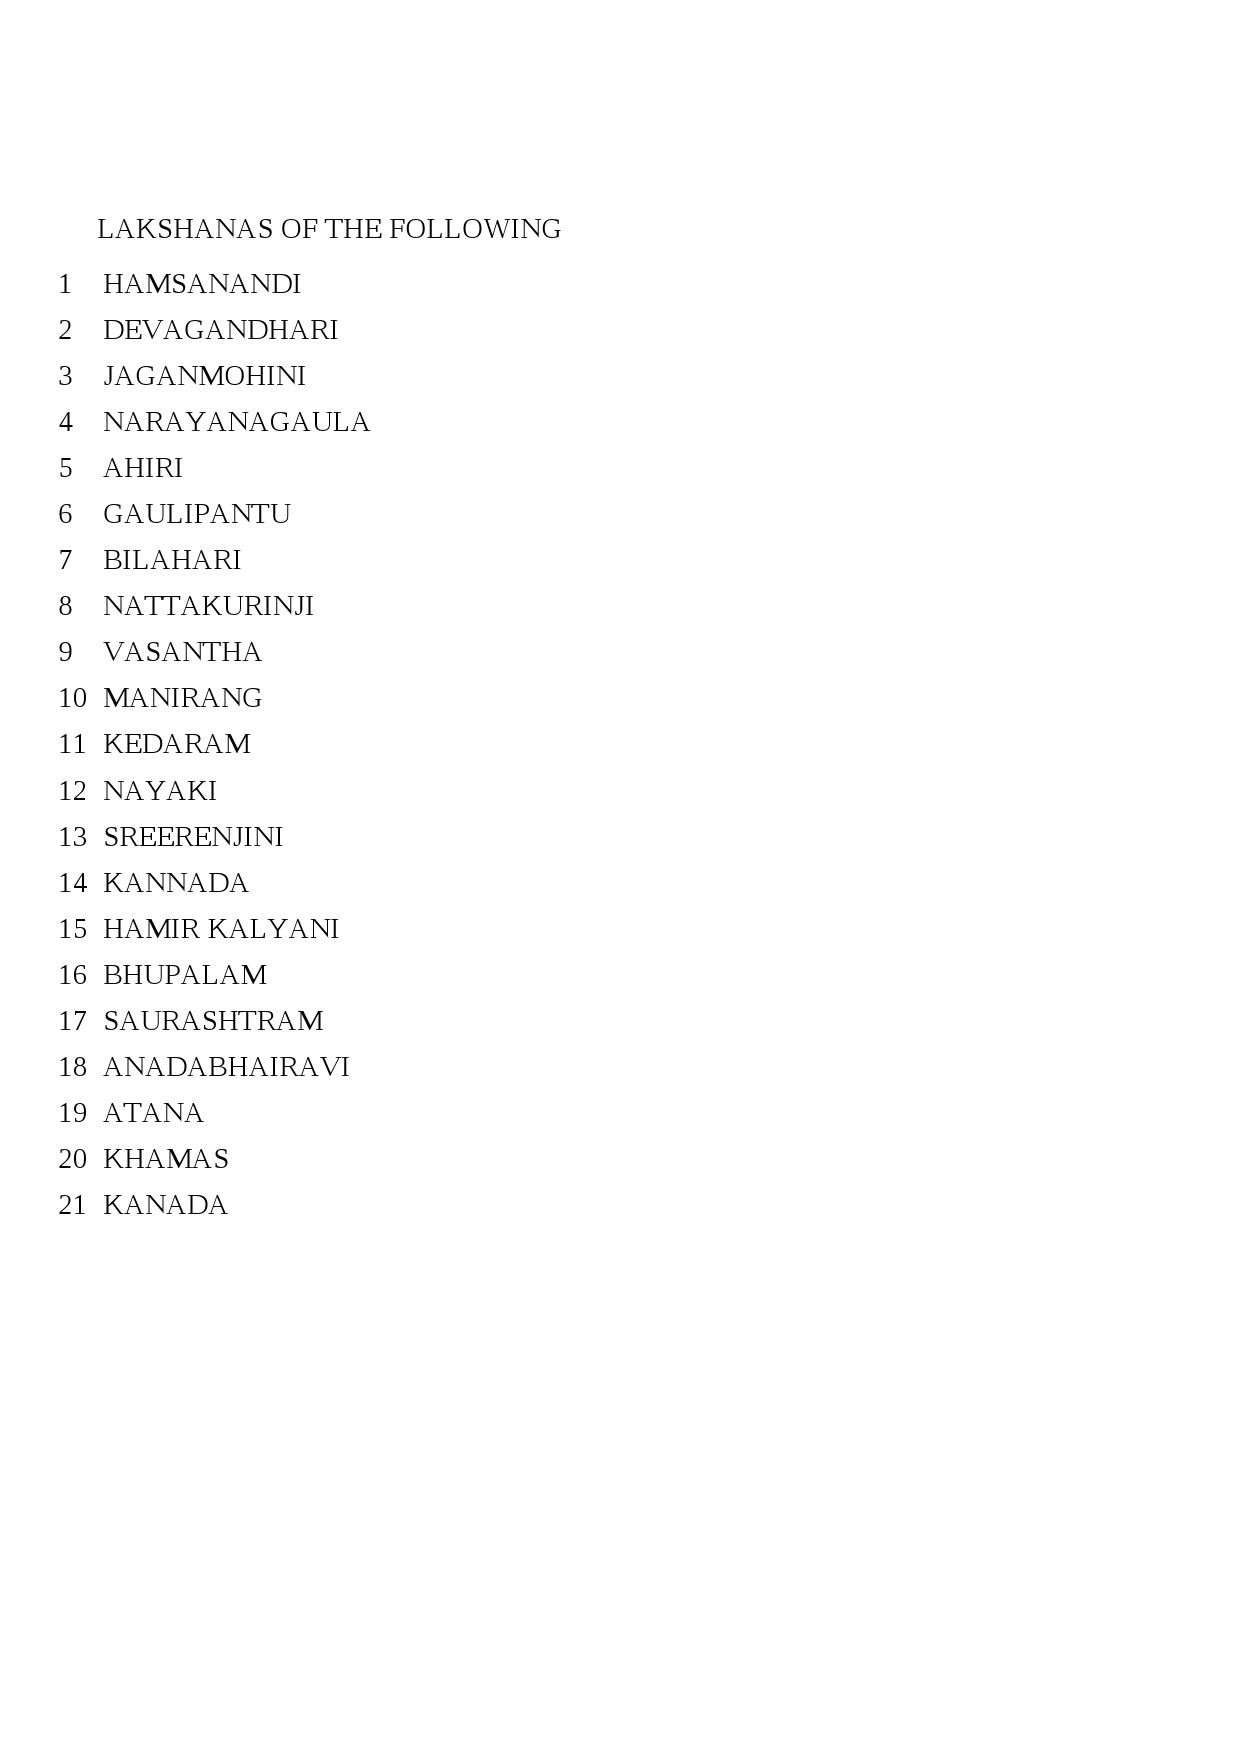 Humanities Syllabus for Kerala PSC 2021 Exam - Notification Image 13